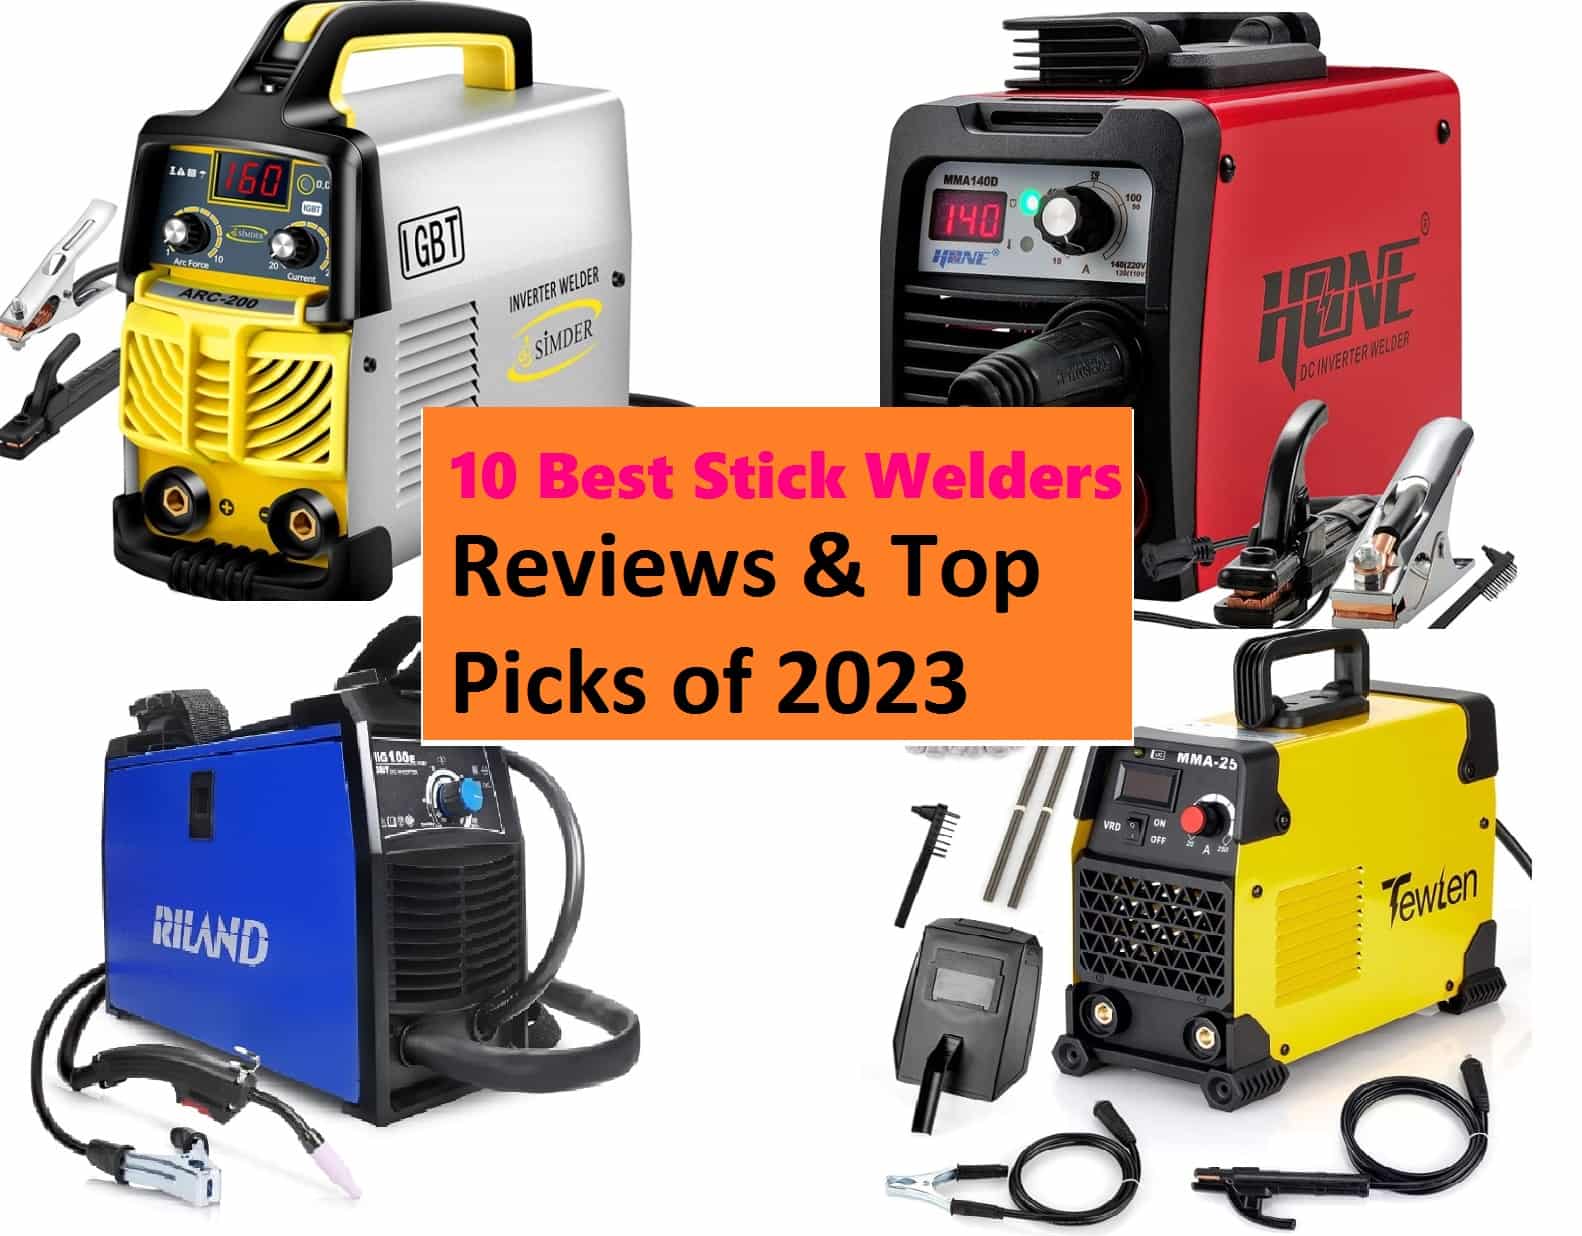 10 Best Stick Welders - Reviews & Top Picks of 2023